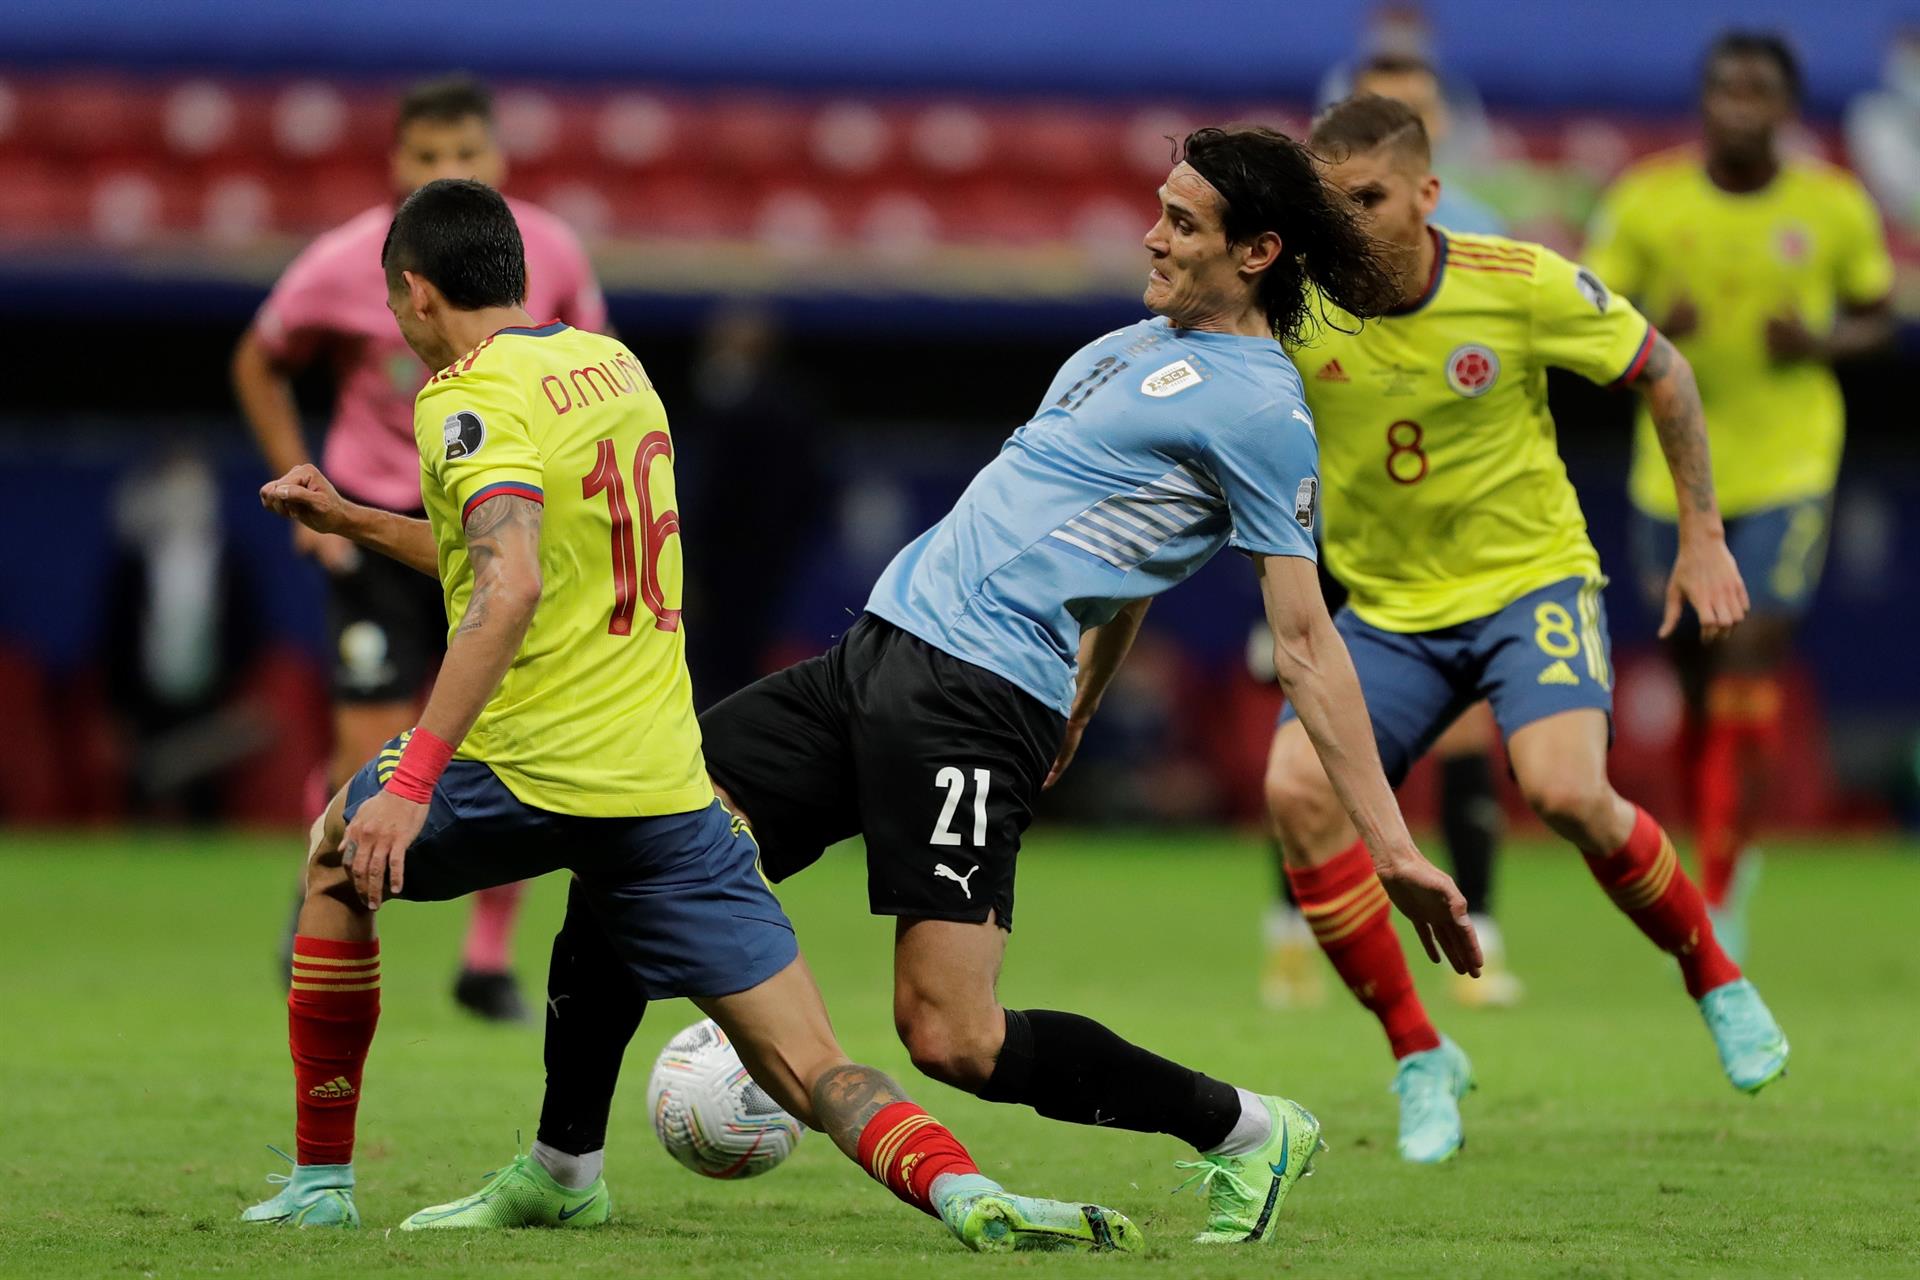 Argentina e Chile se classificam para as semis no futebol feminino